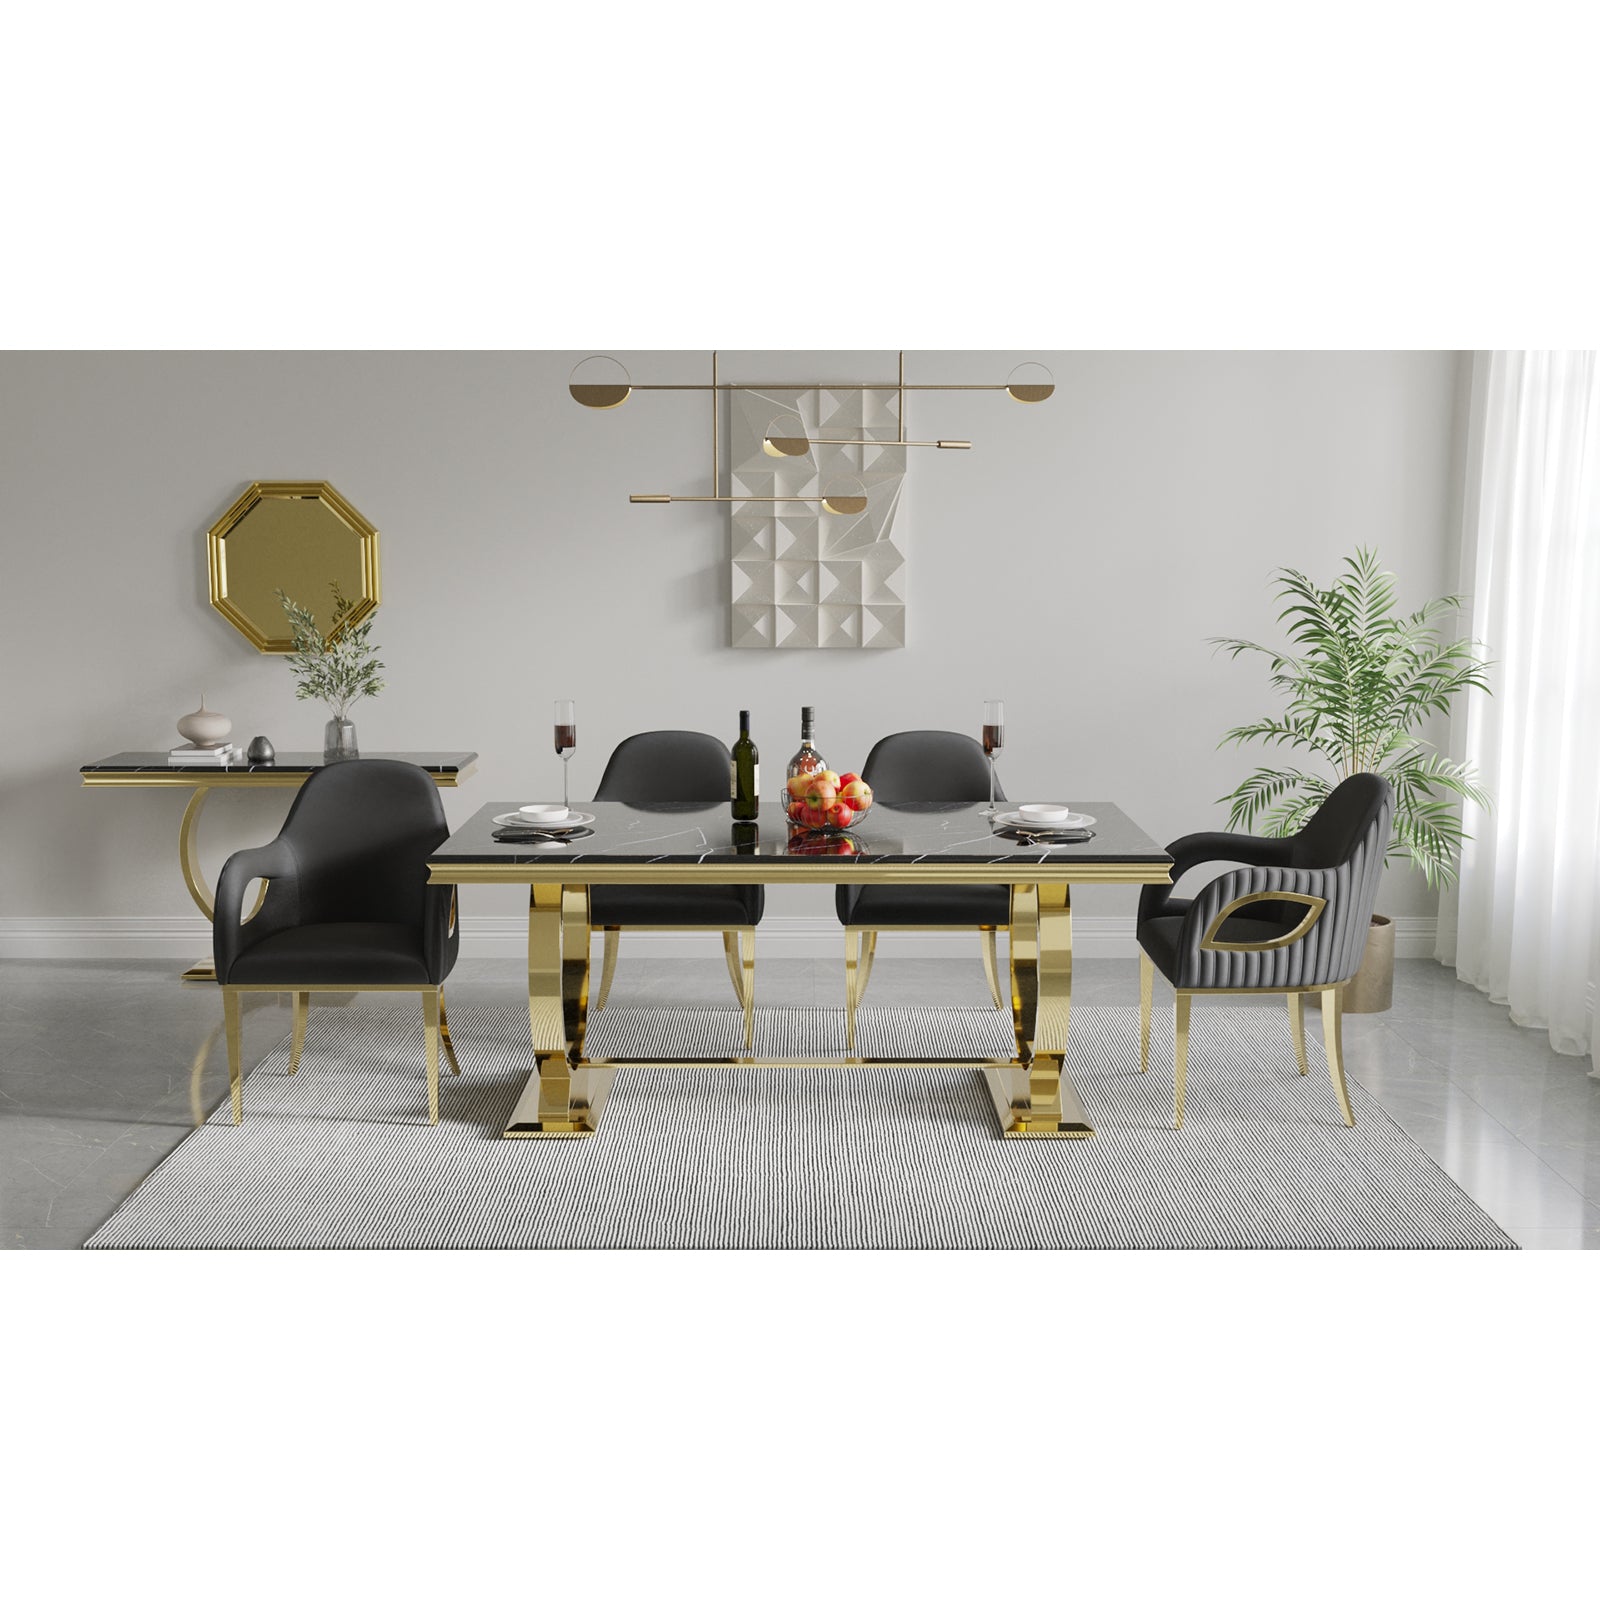 625-Set | AUZ Black and Gold Dining room Sets for 6